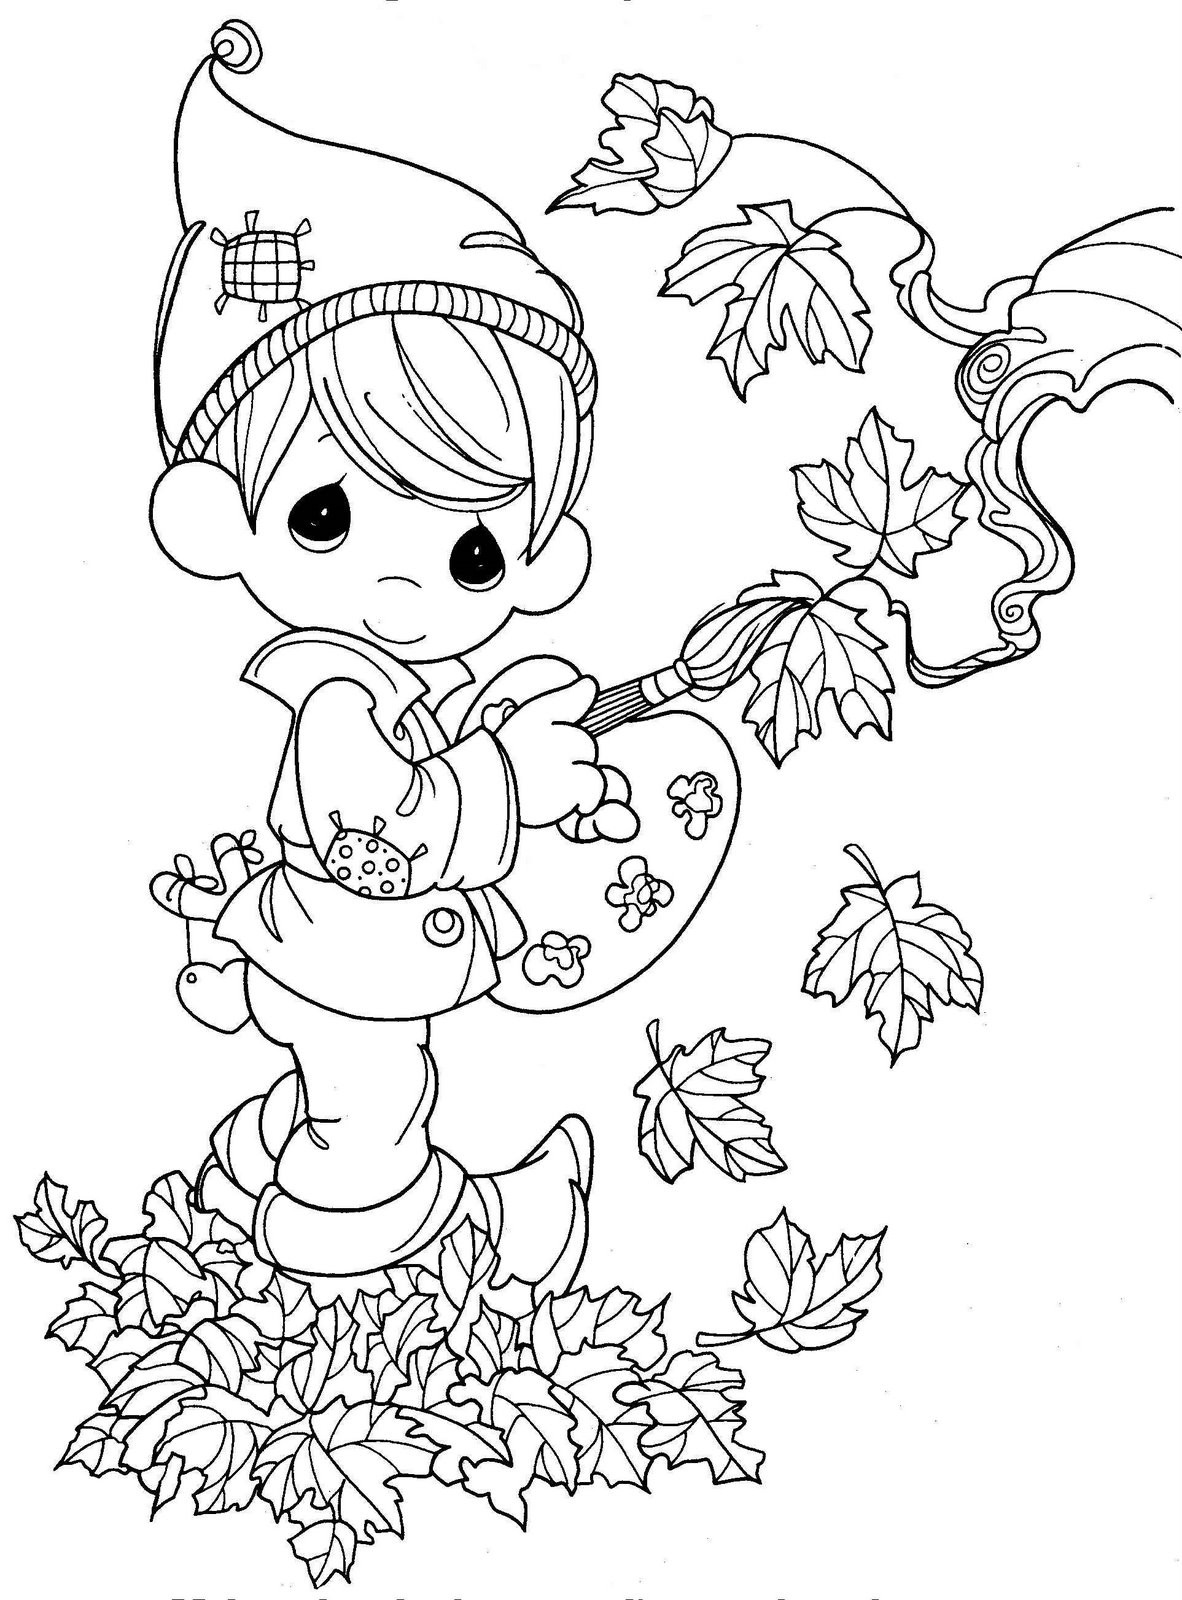 Printable Coloring Sheets For Fall
 Autumn Season